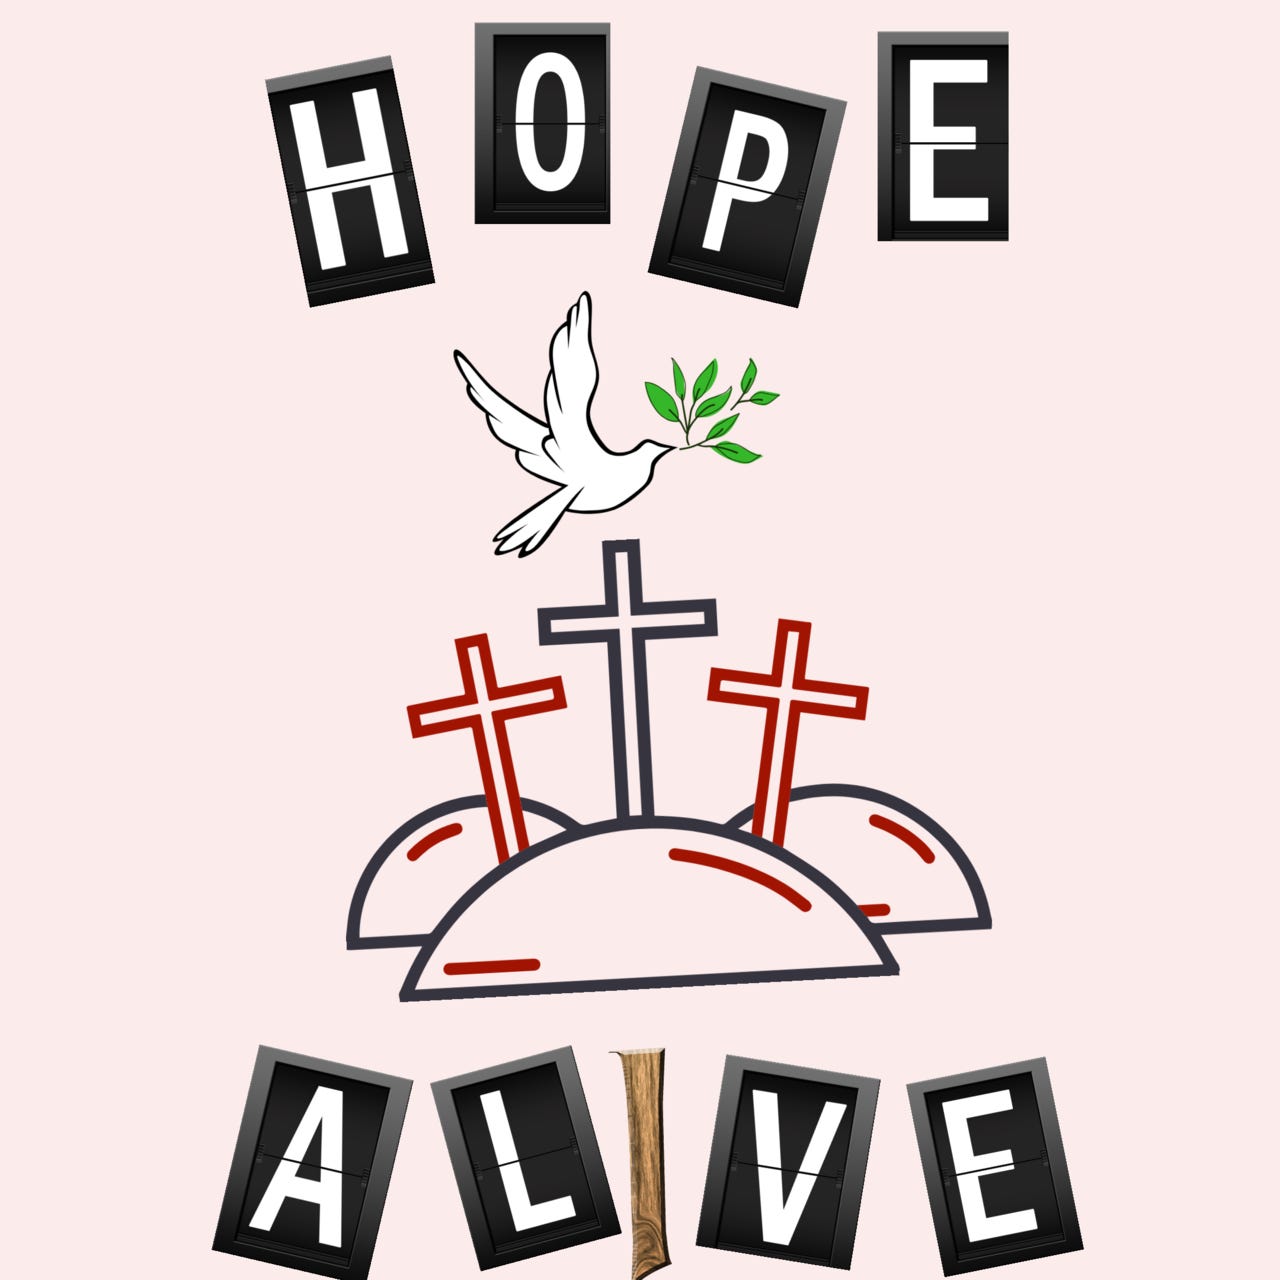 HOPE ALIVE 